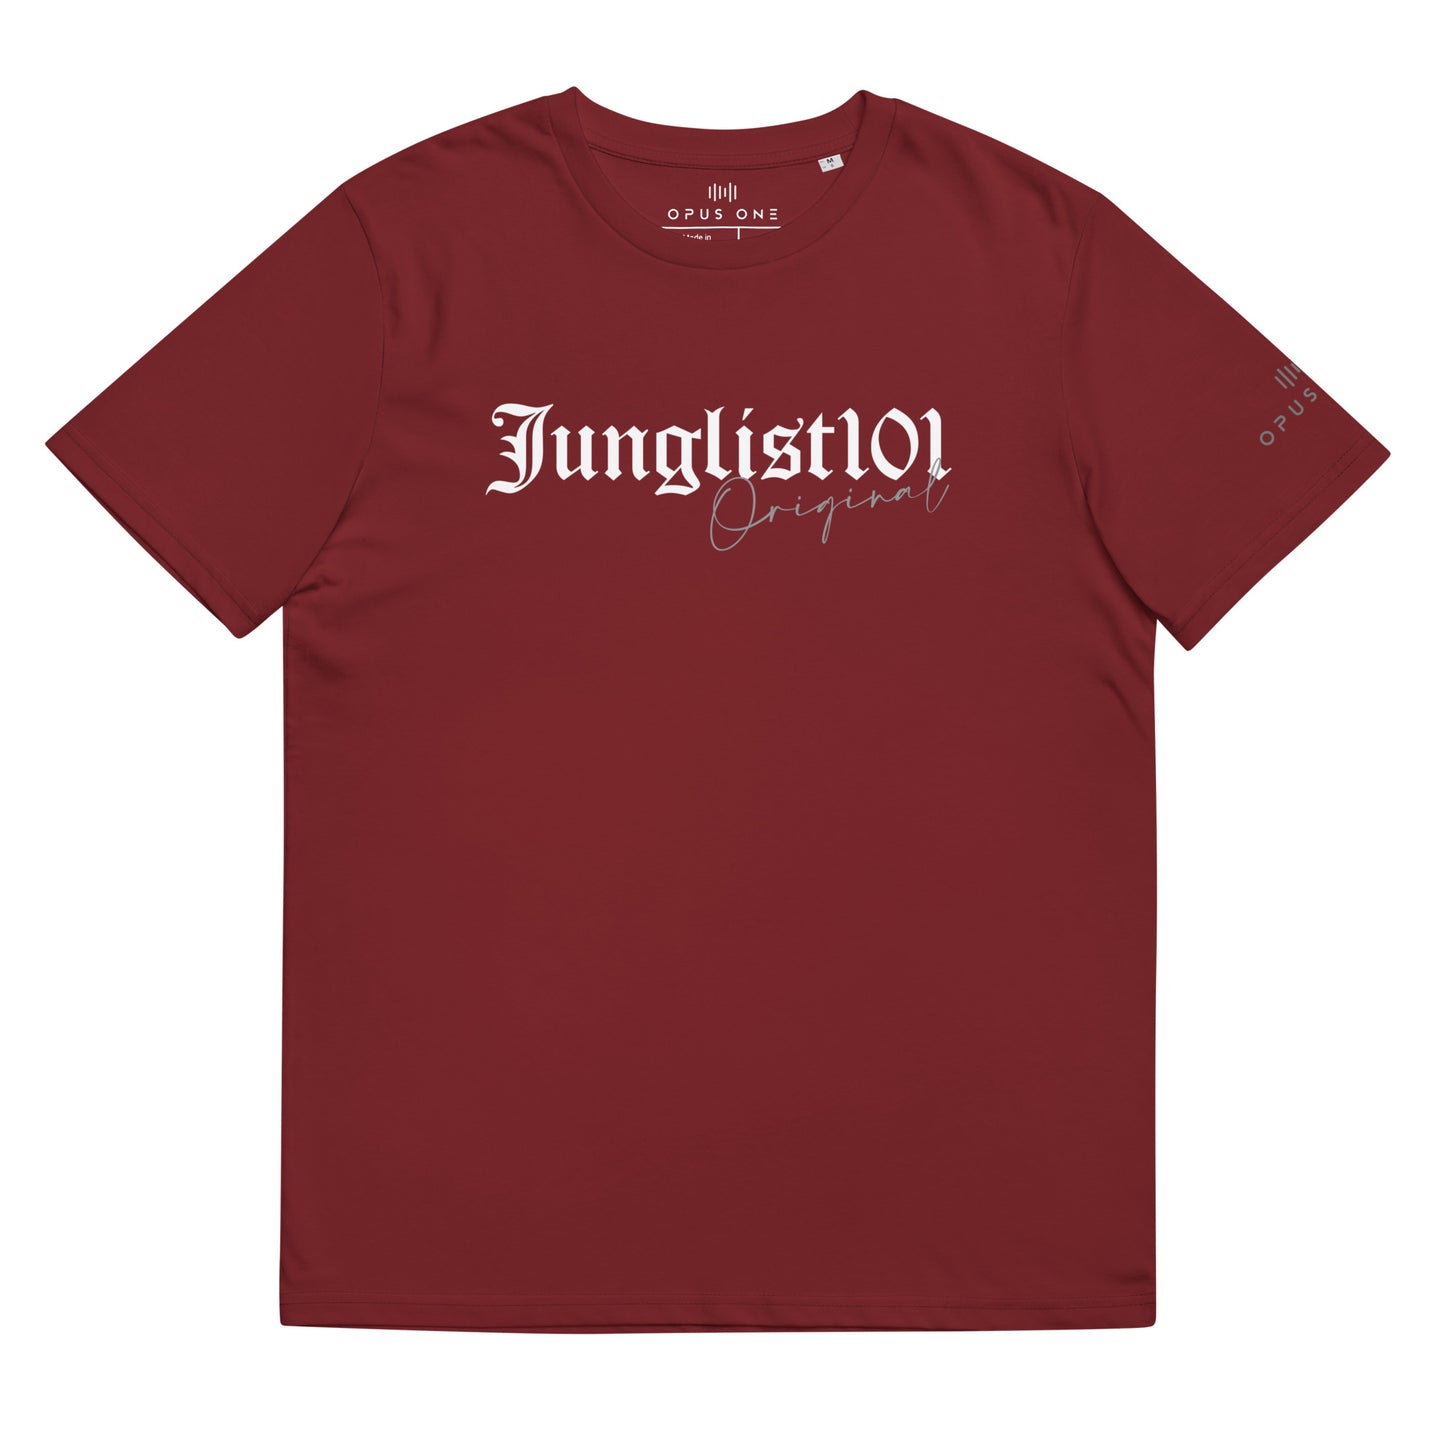 Junglist101 (White Text) Unisex organic cotton t-shirt